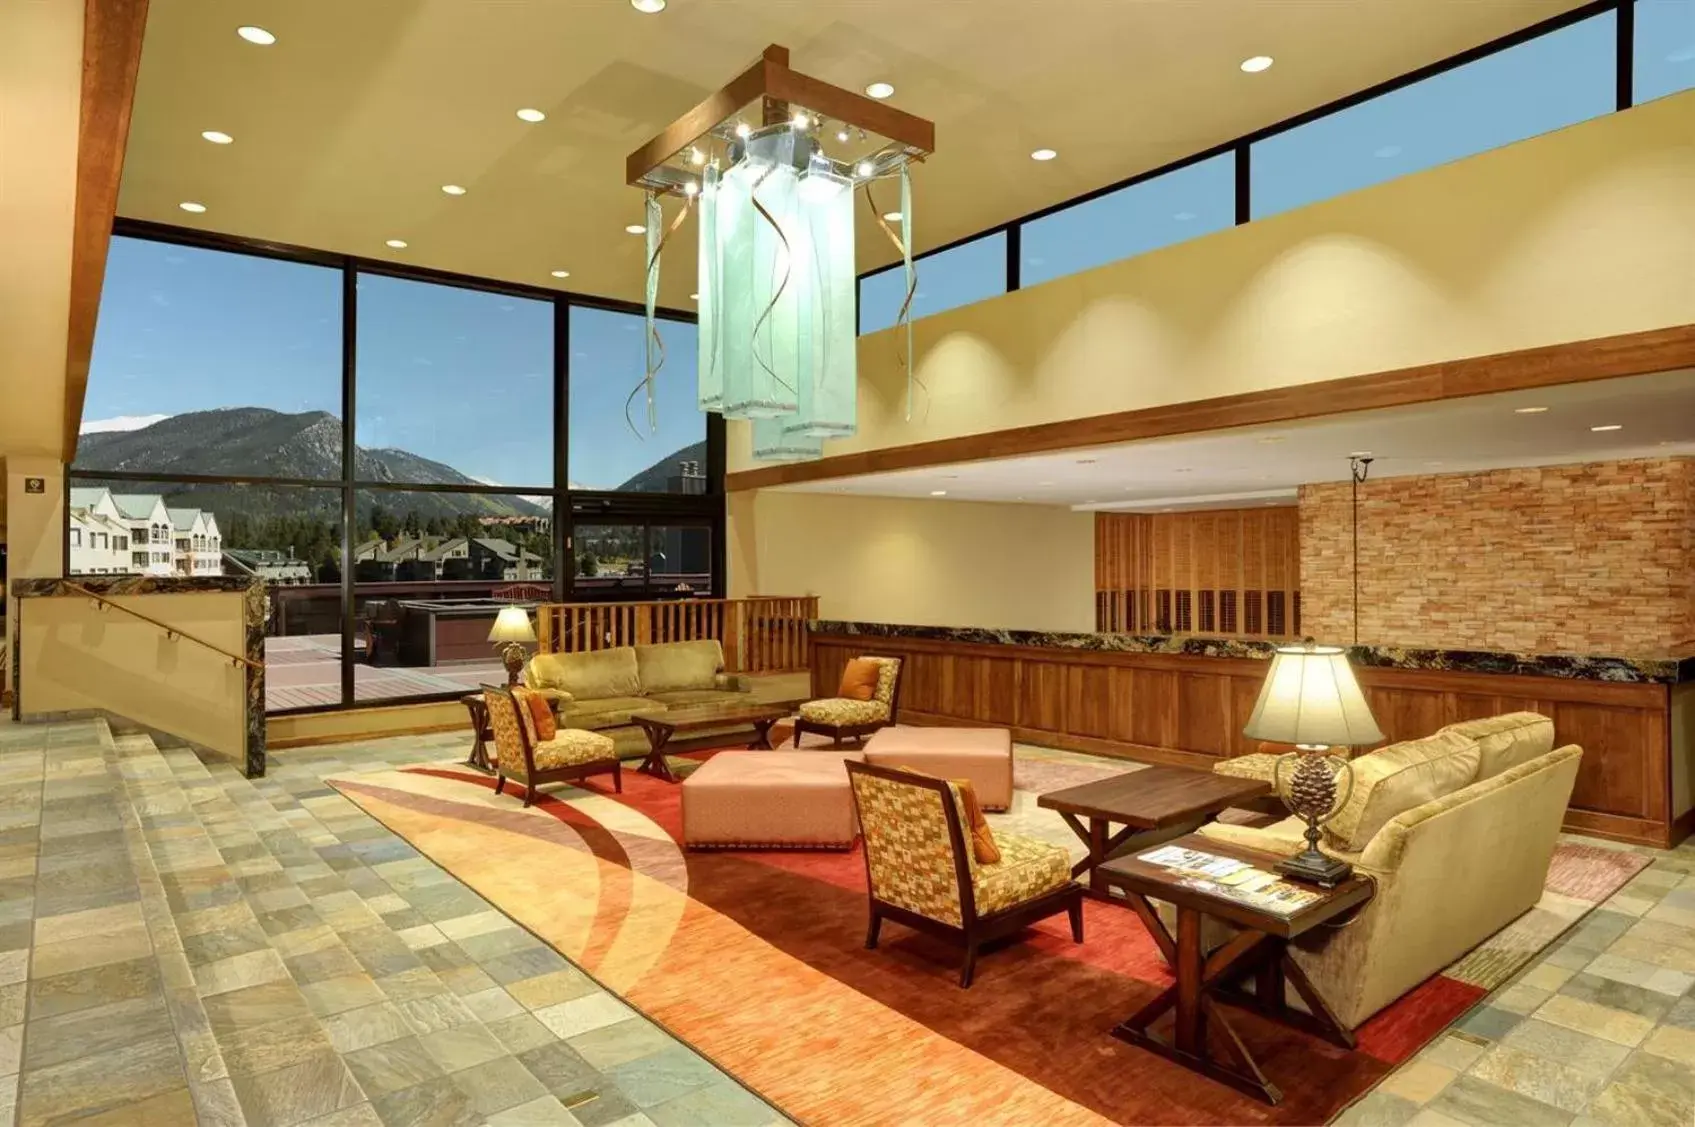 Lobby or reception in The Keystone Lodge and Spa by Keystone Resort